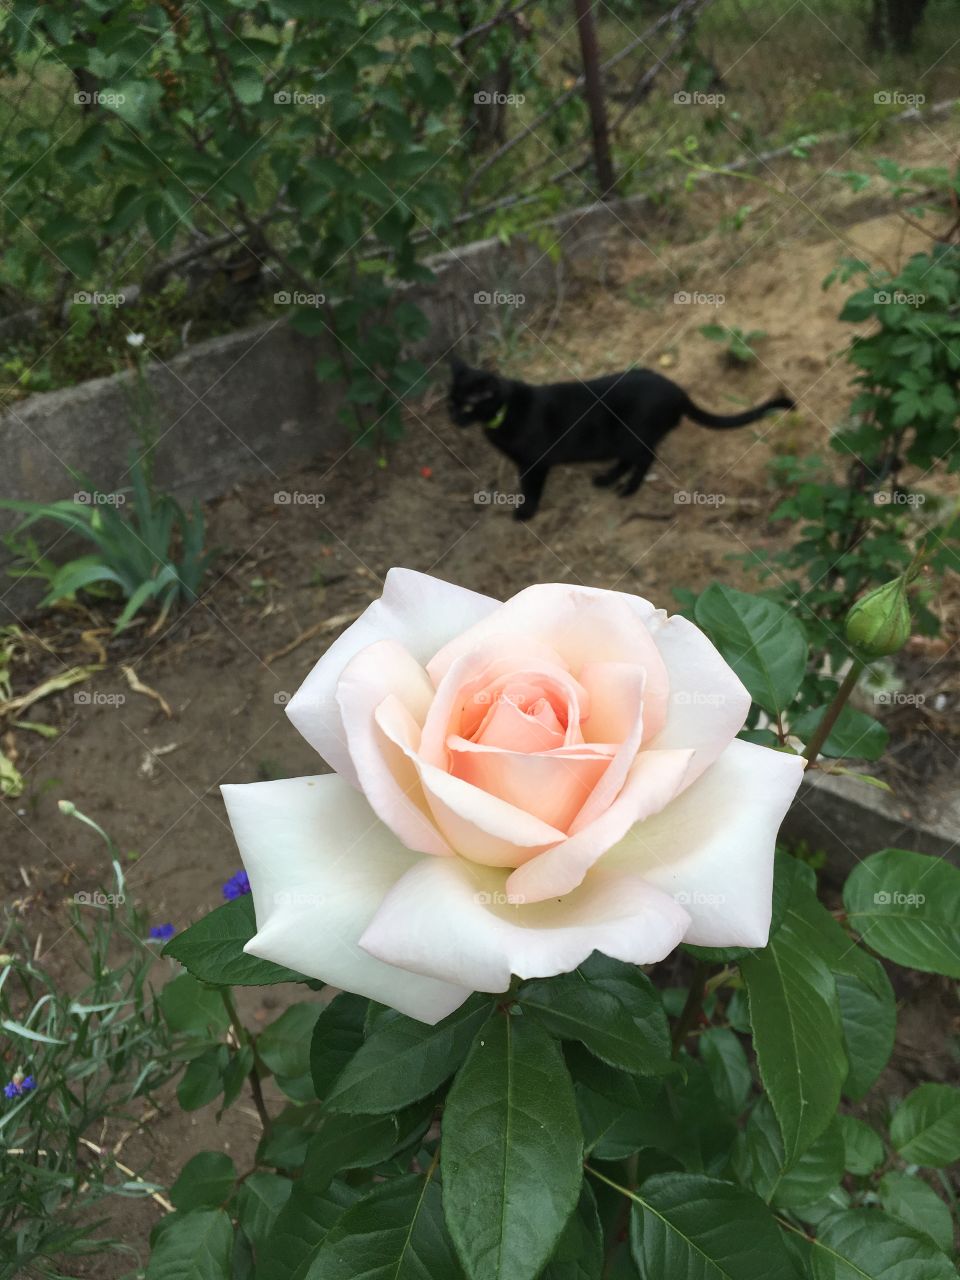 Black cat and beautiful rose